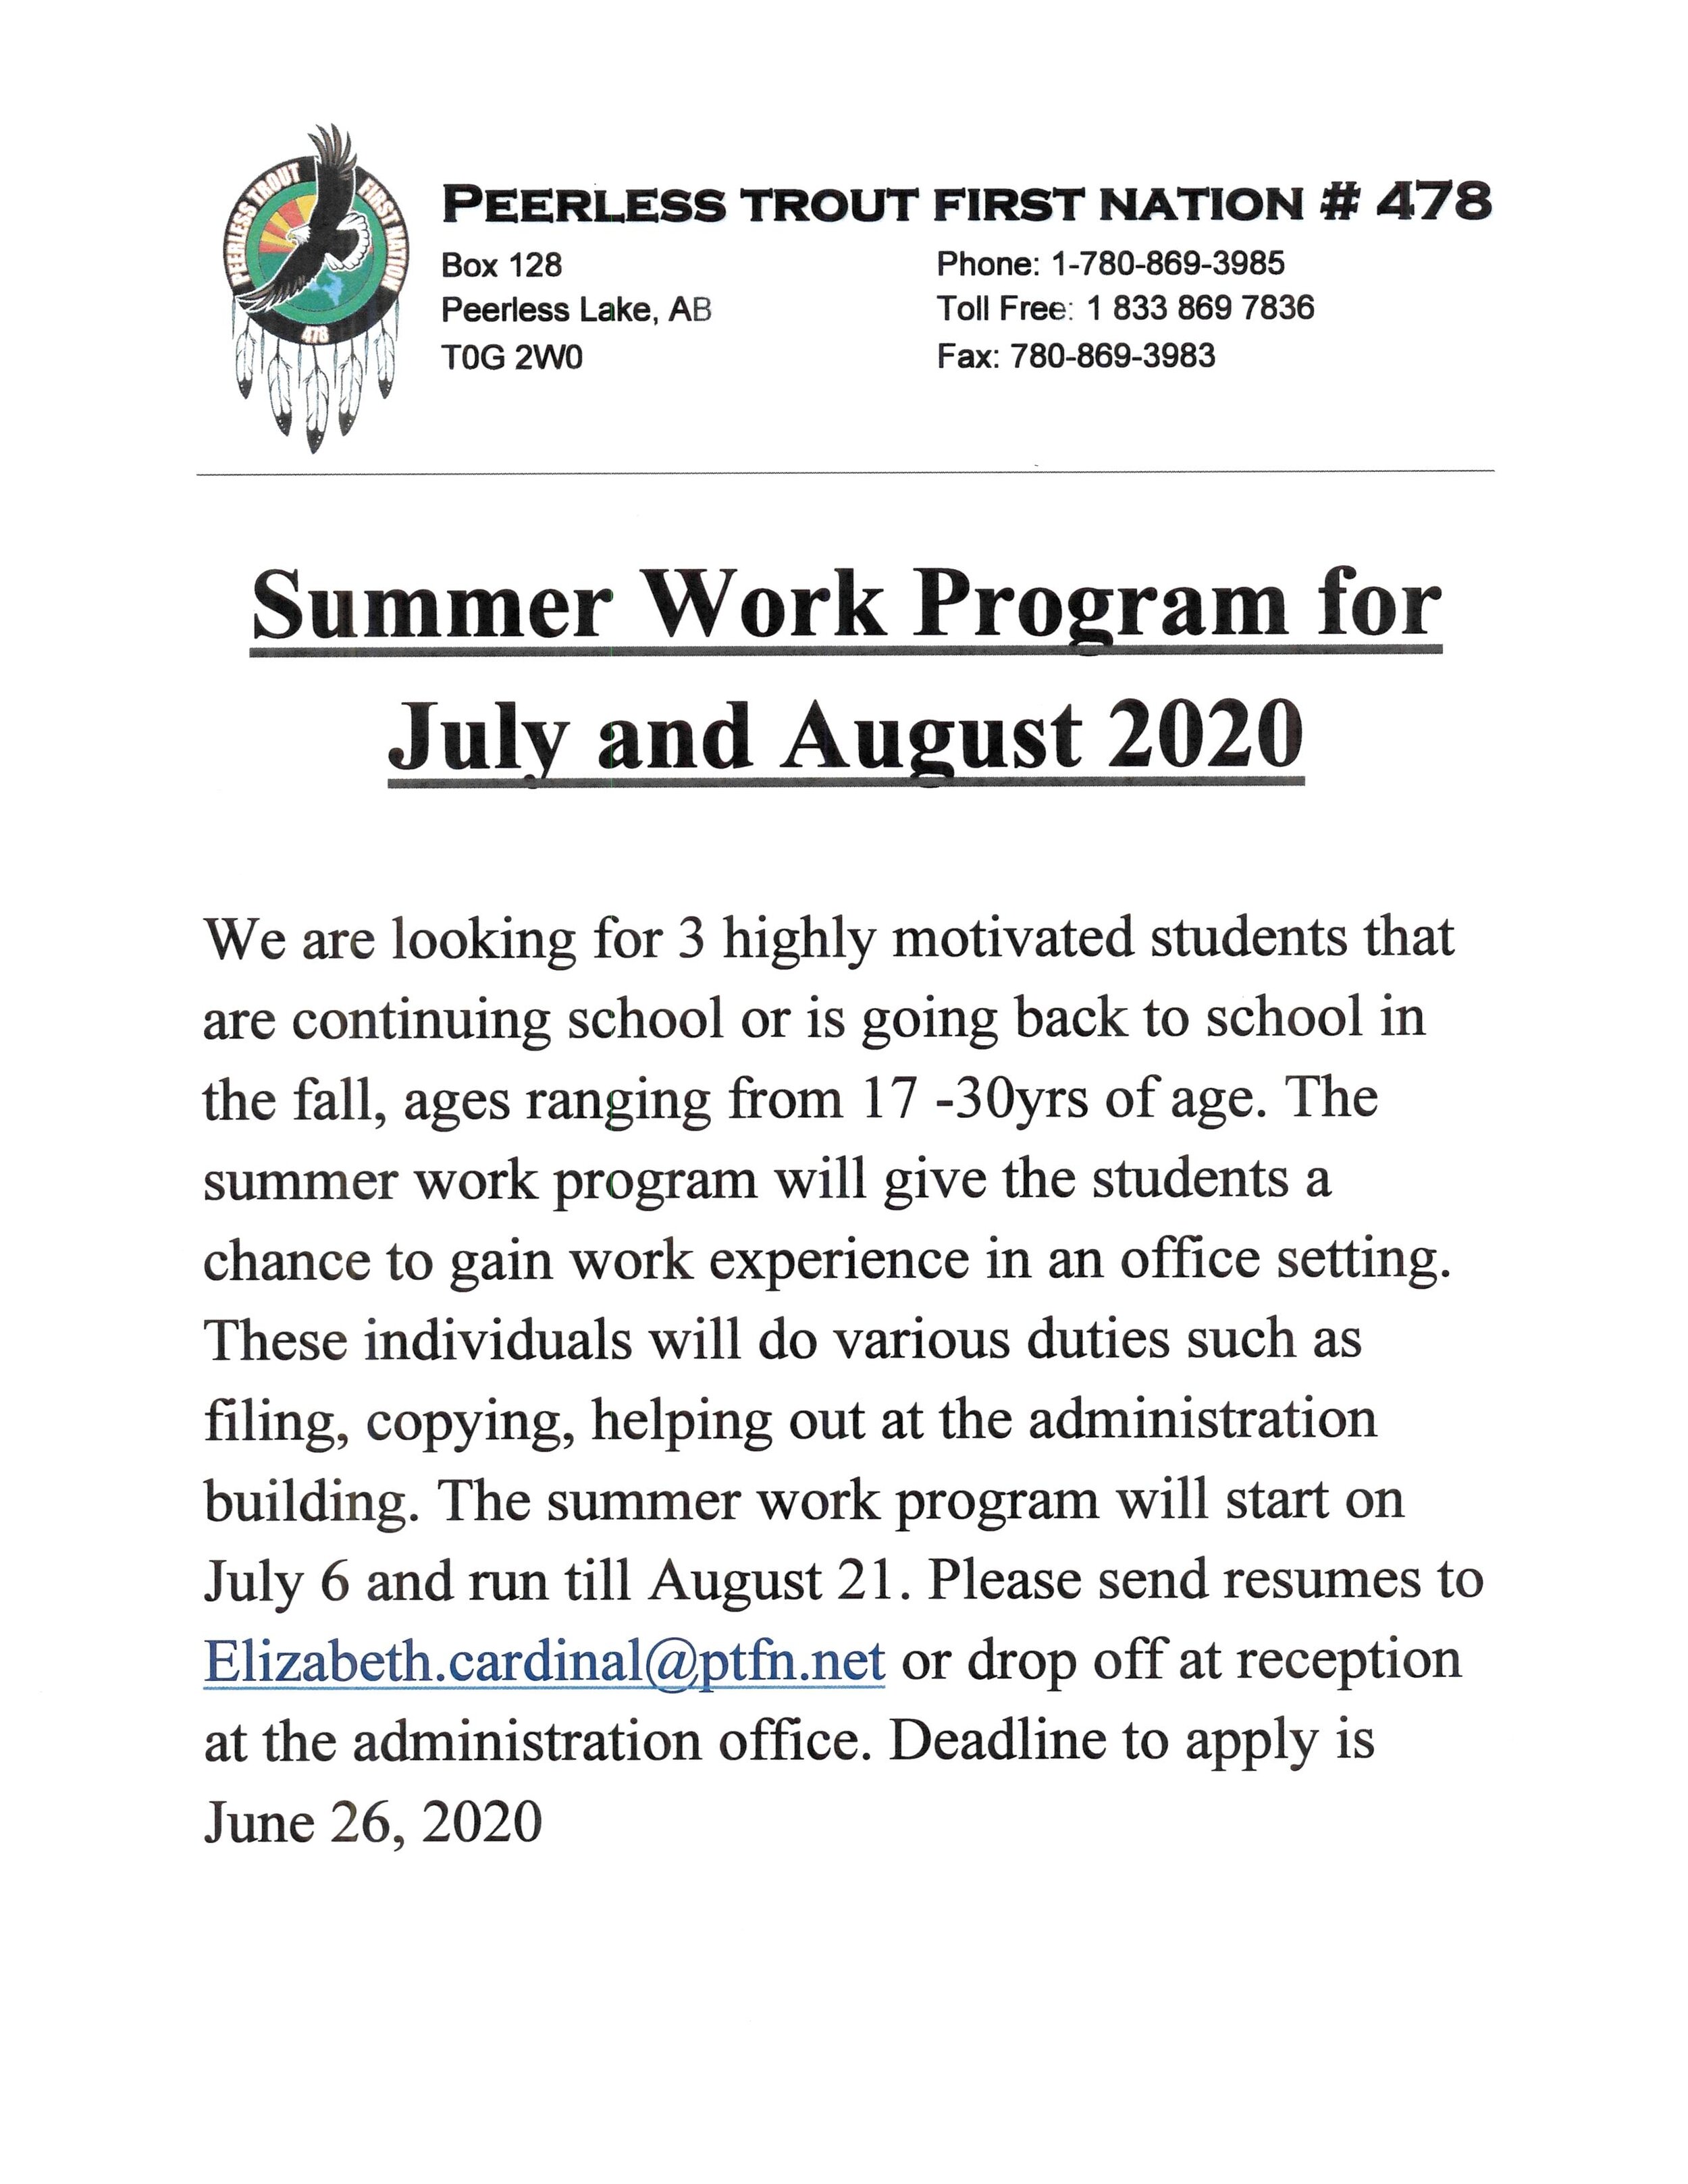 Summer work 2020.jpg